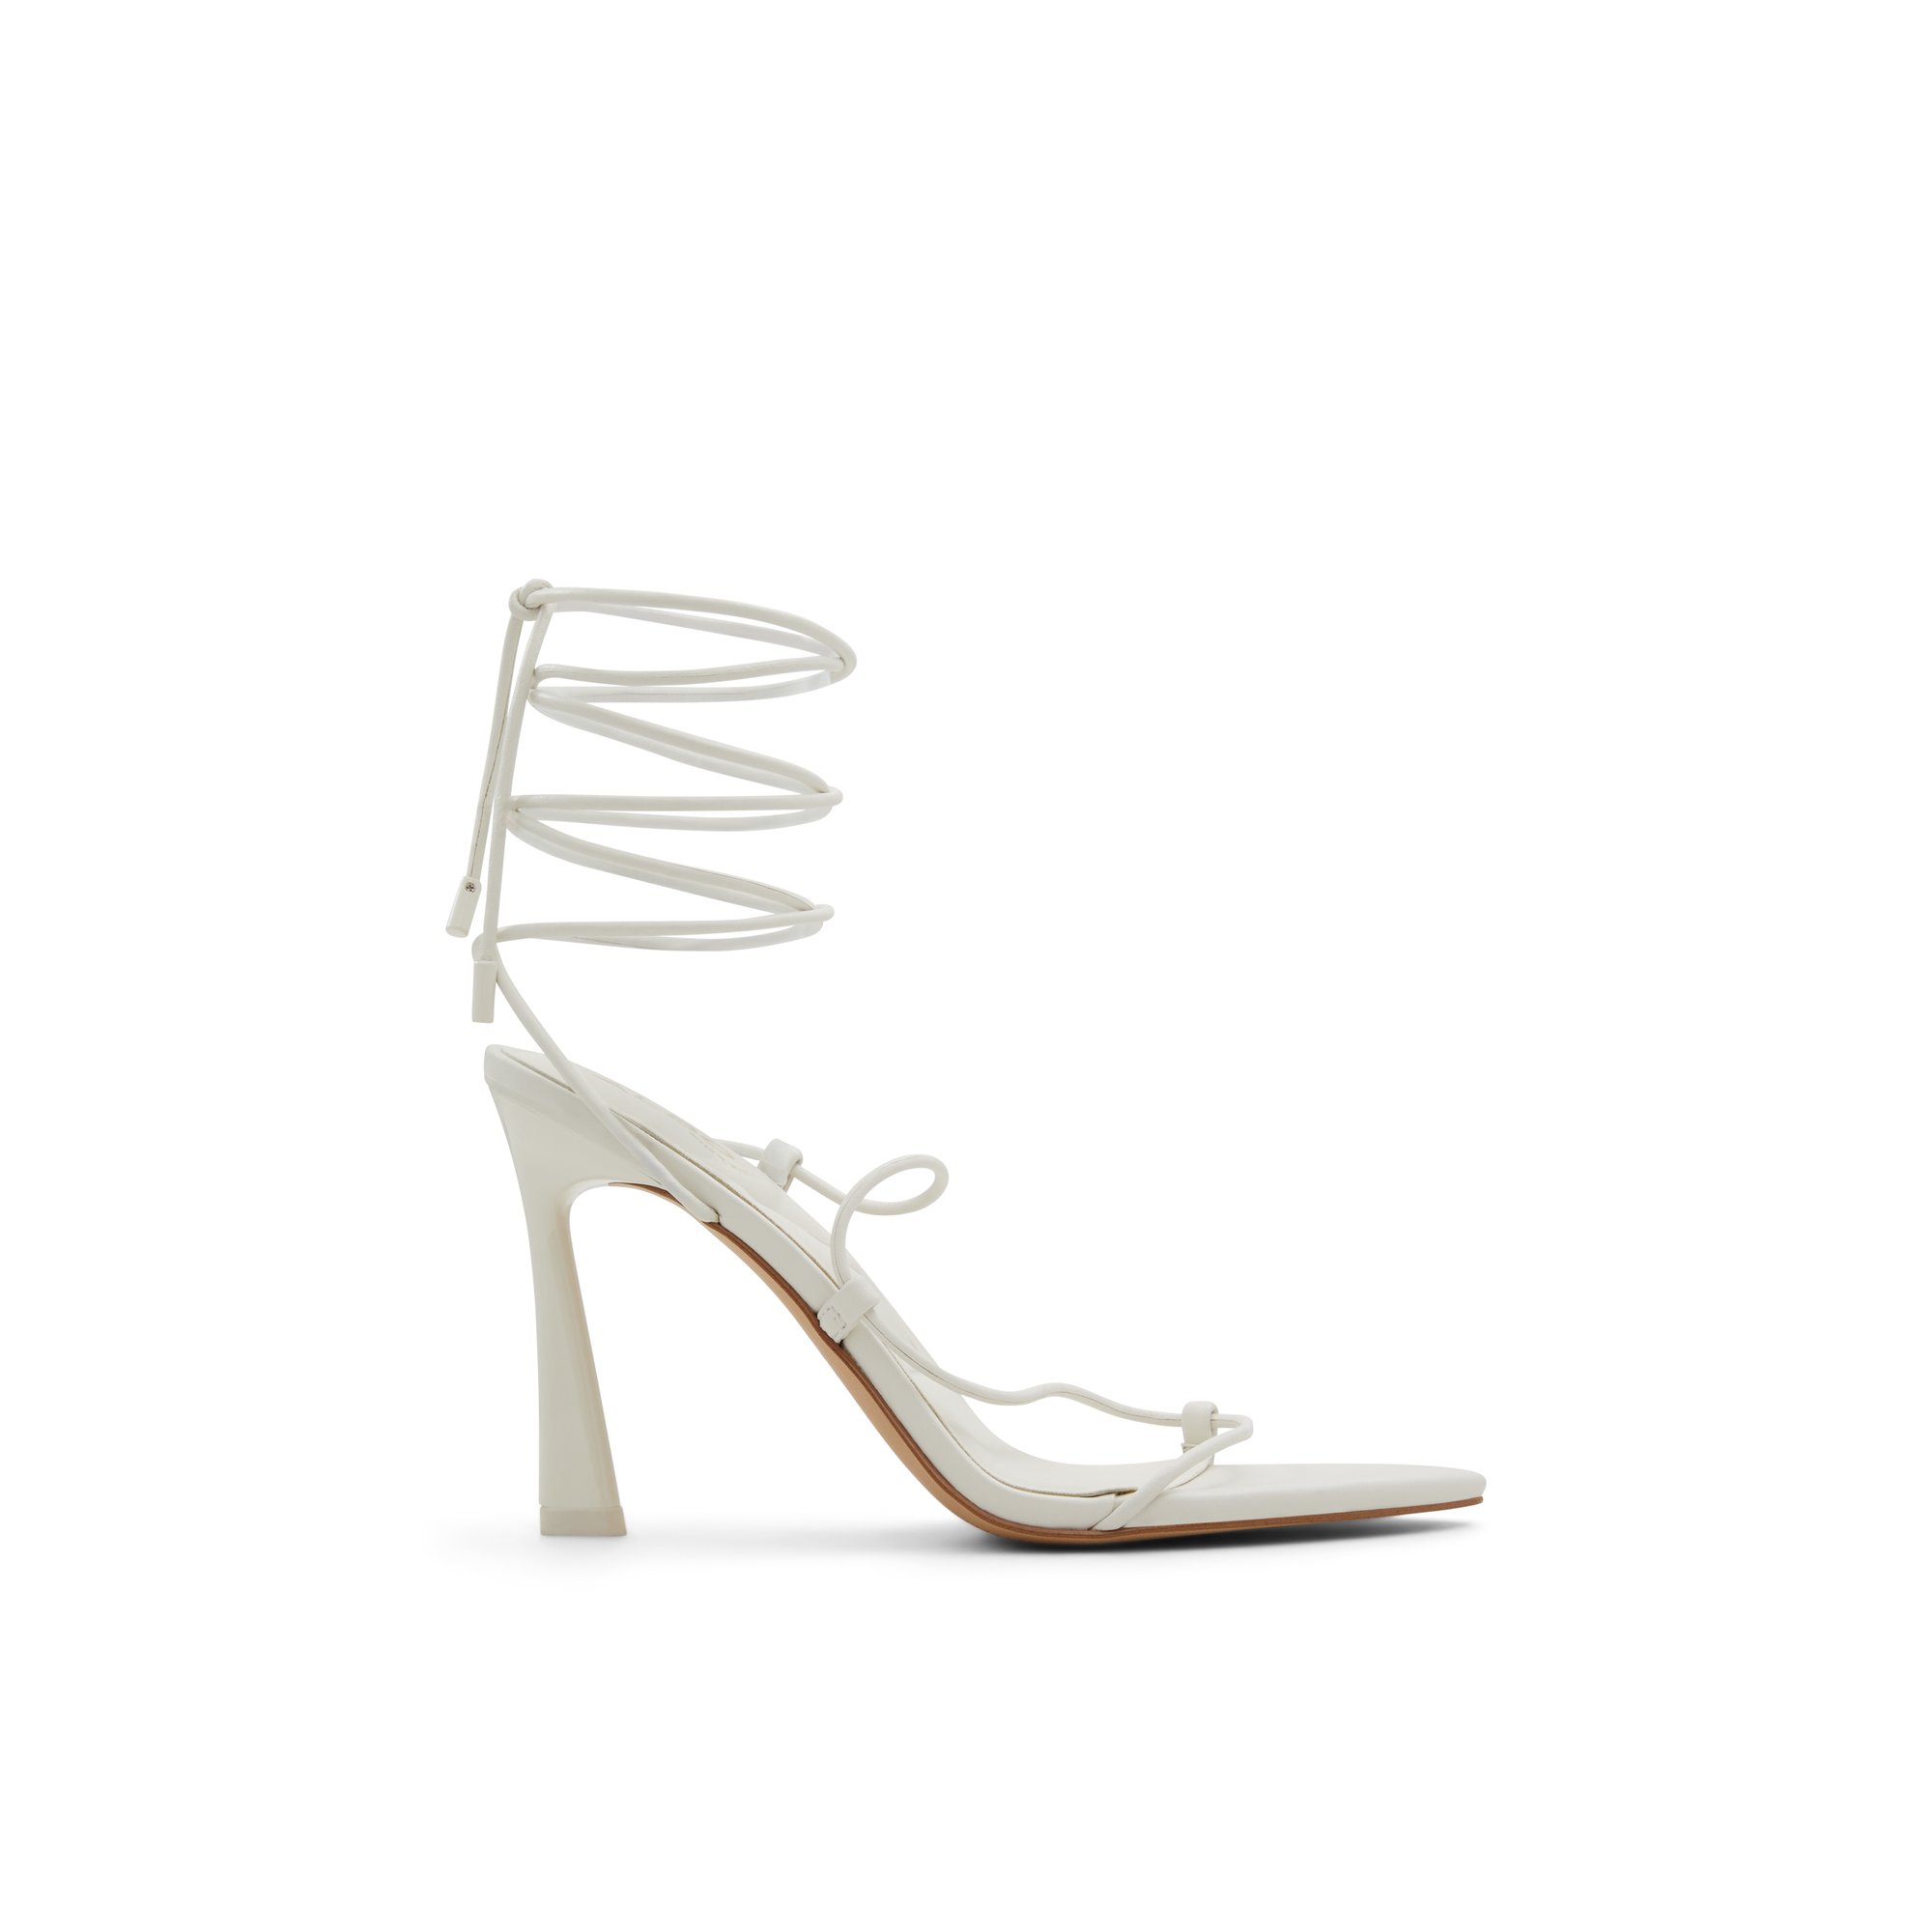 ALDO Melodic - Women's Strappy Sandal Sandals - White